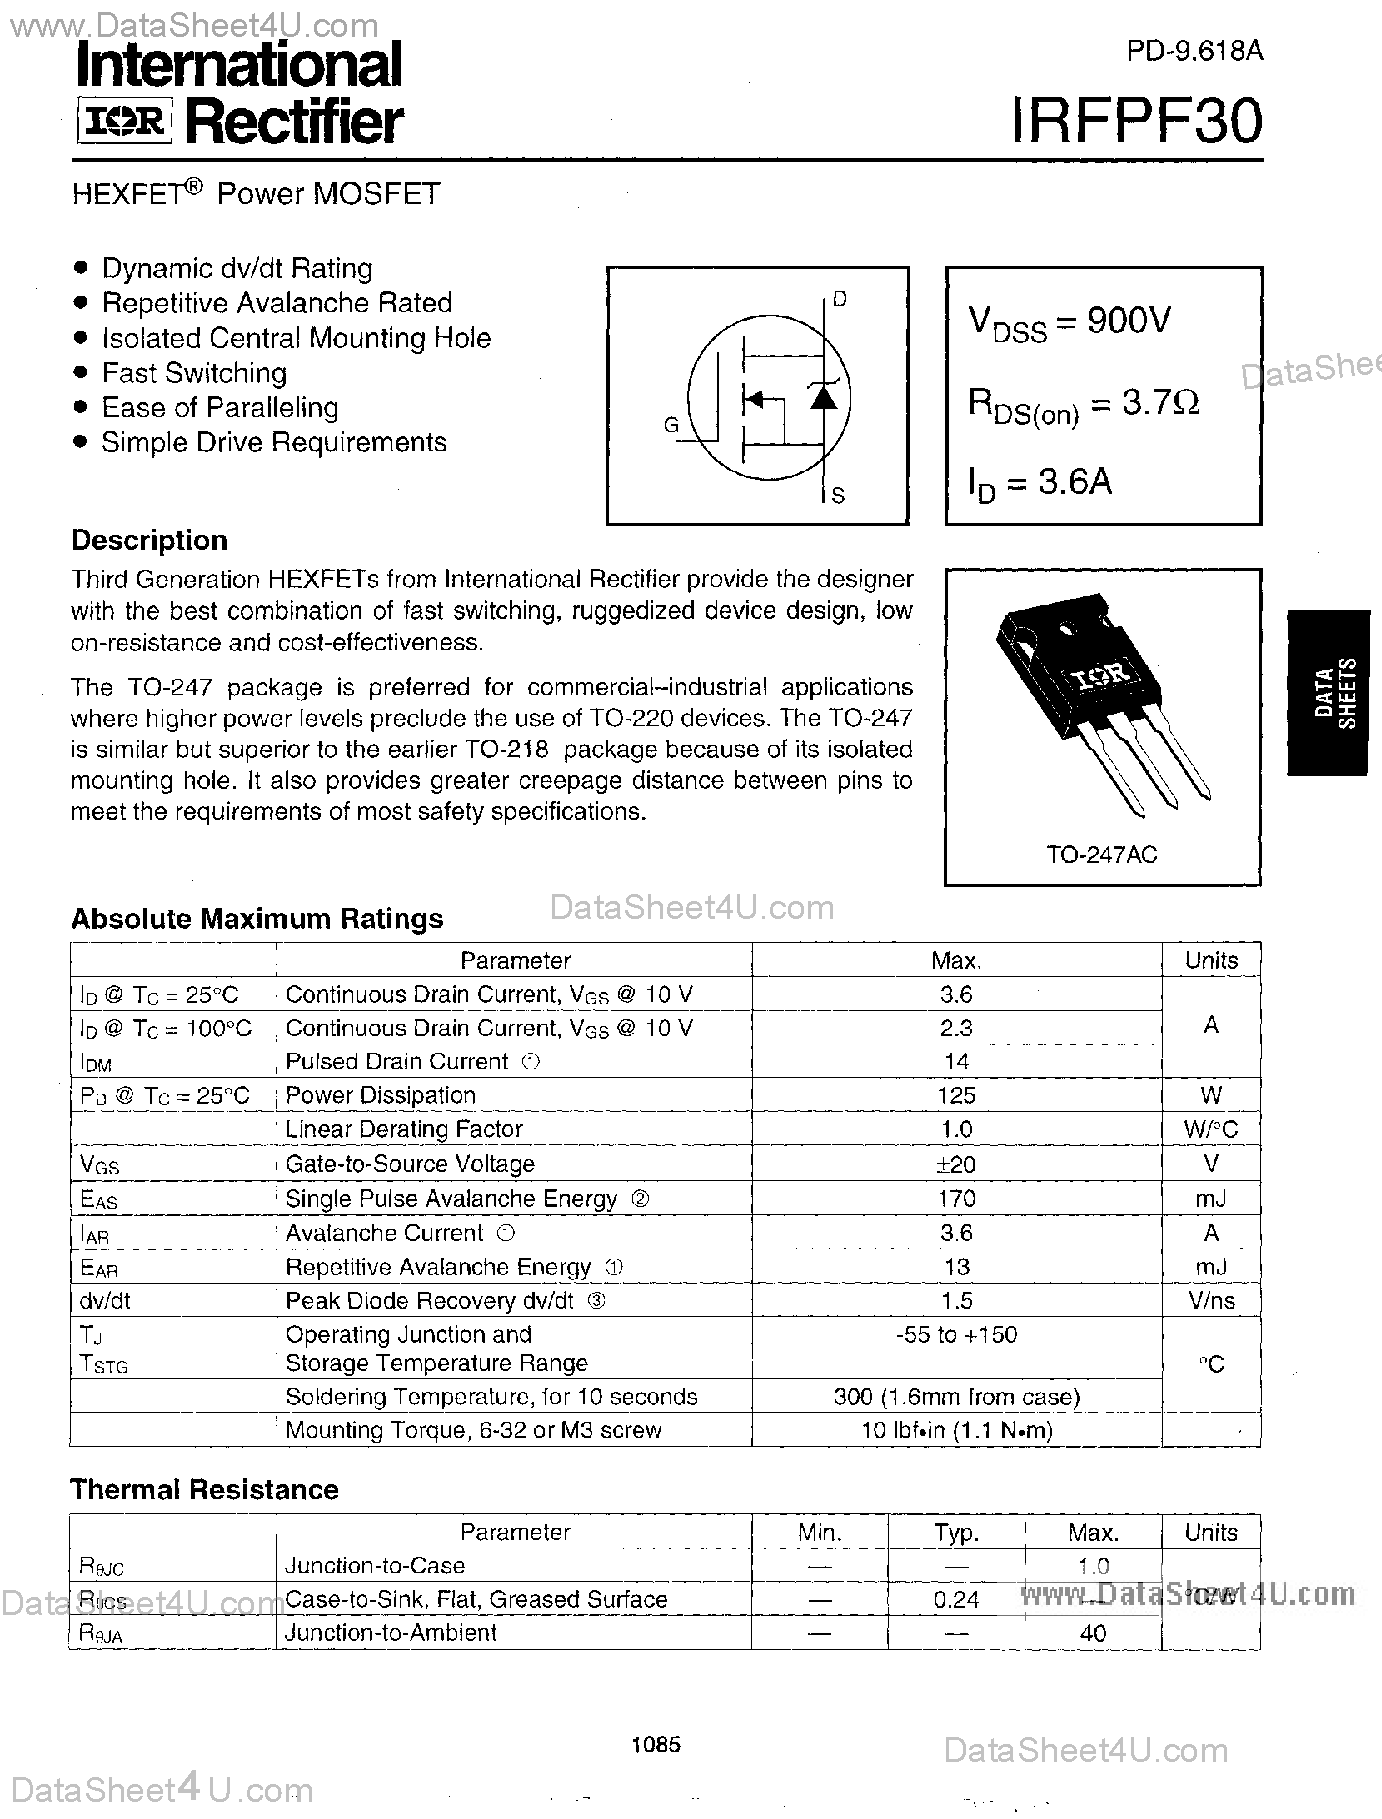 Datasheet IRFPF30 - Power MOSFET page 1